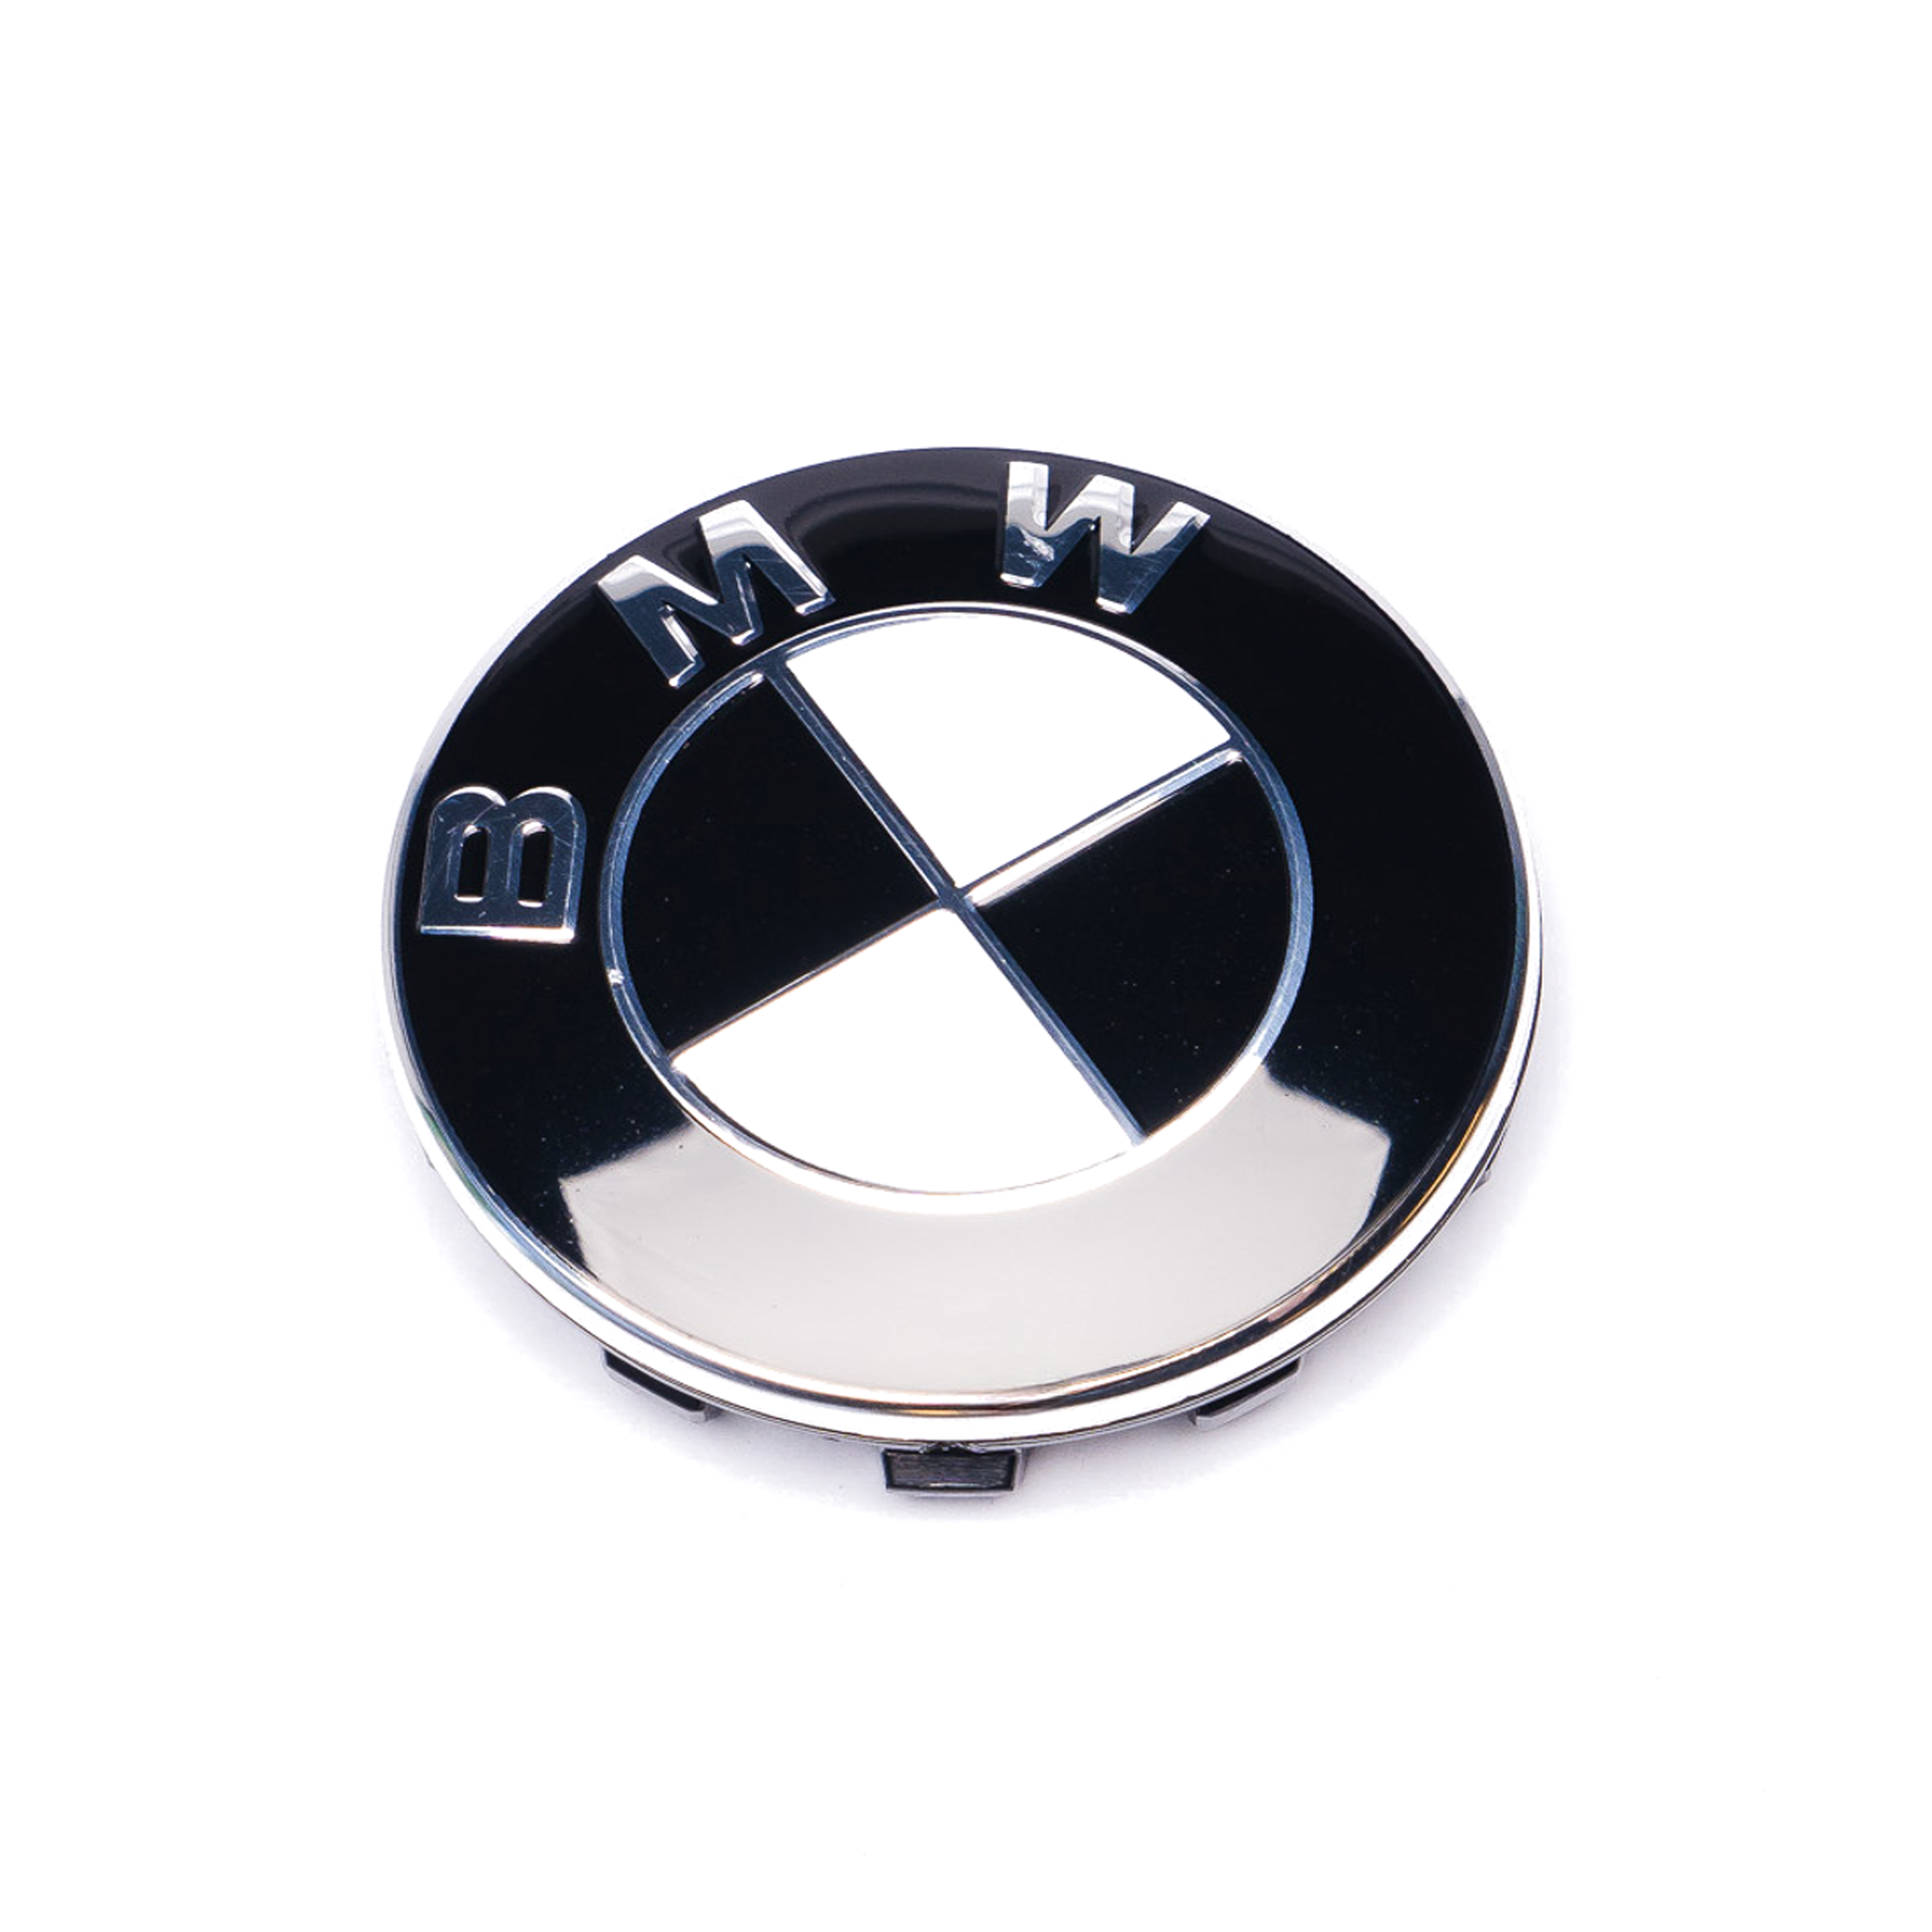 Exon BMW Style Stealth Black / White Wheel Center Cap 56mm for BMW 1 2 3 5 7 8 X1 X2 X3 X4 X5 X6 X7